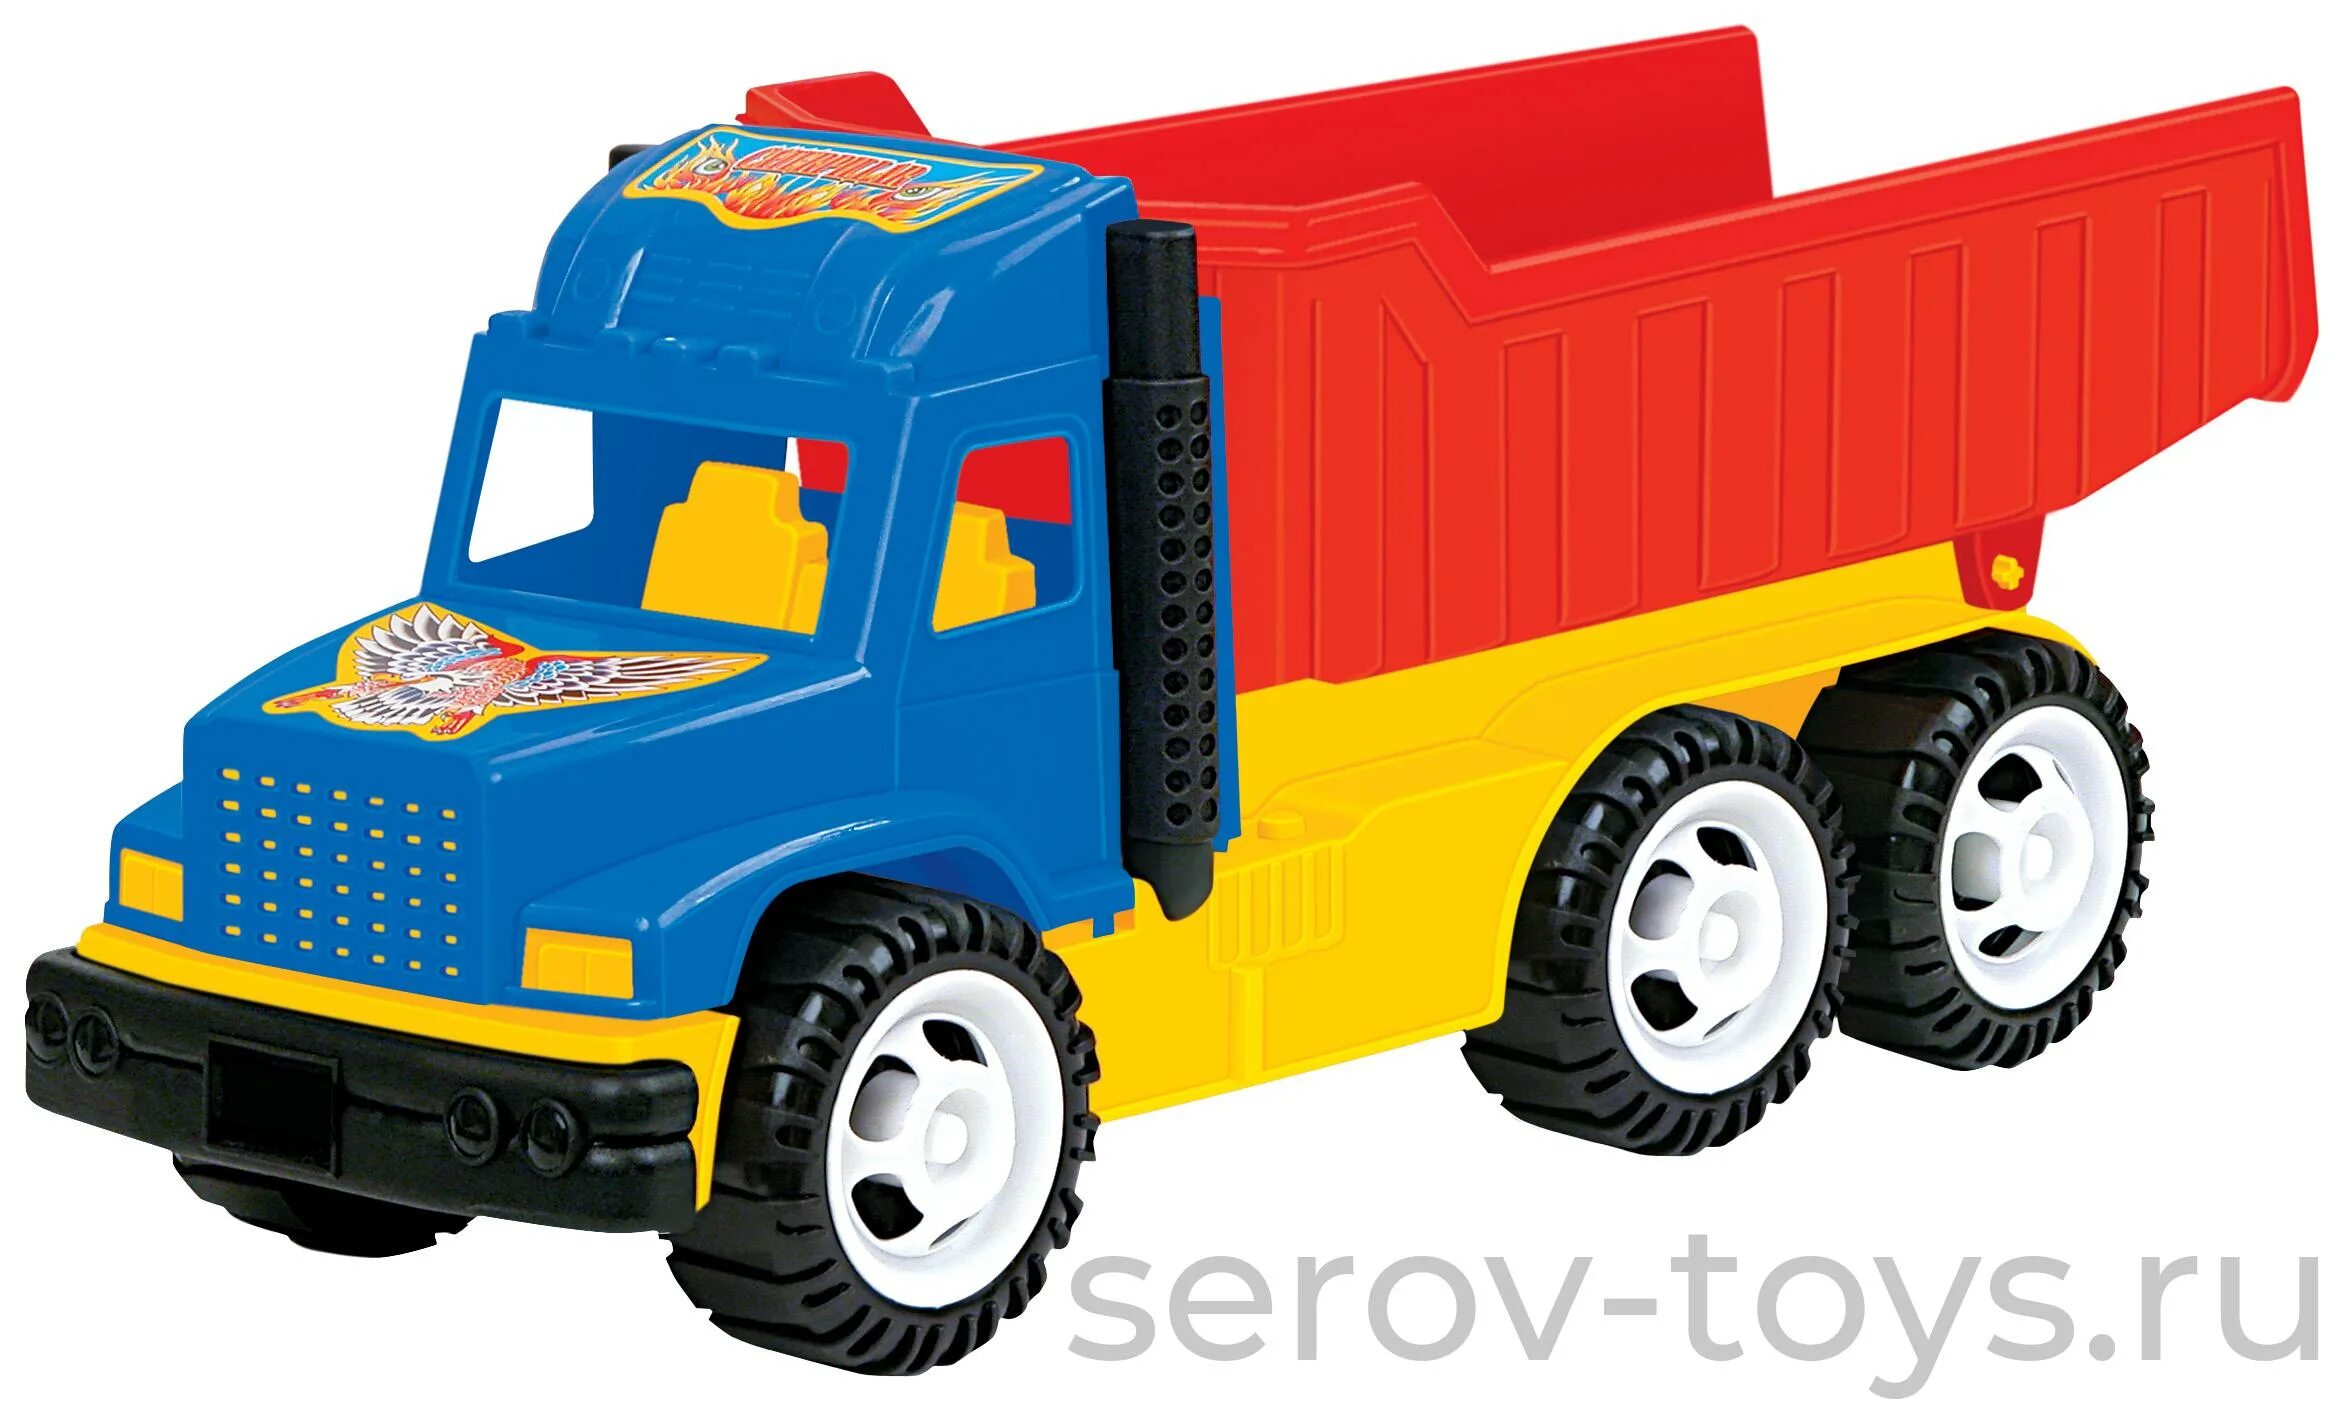 Truck toy cars. Самосвал Panther Полесье 41739. Самосвал "Престиж" 44211. Полесье Trucker самосвал. Машинка грузовик игрушка.